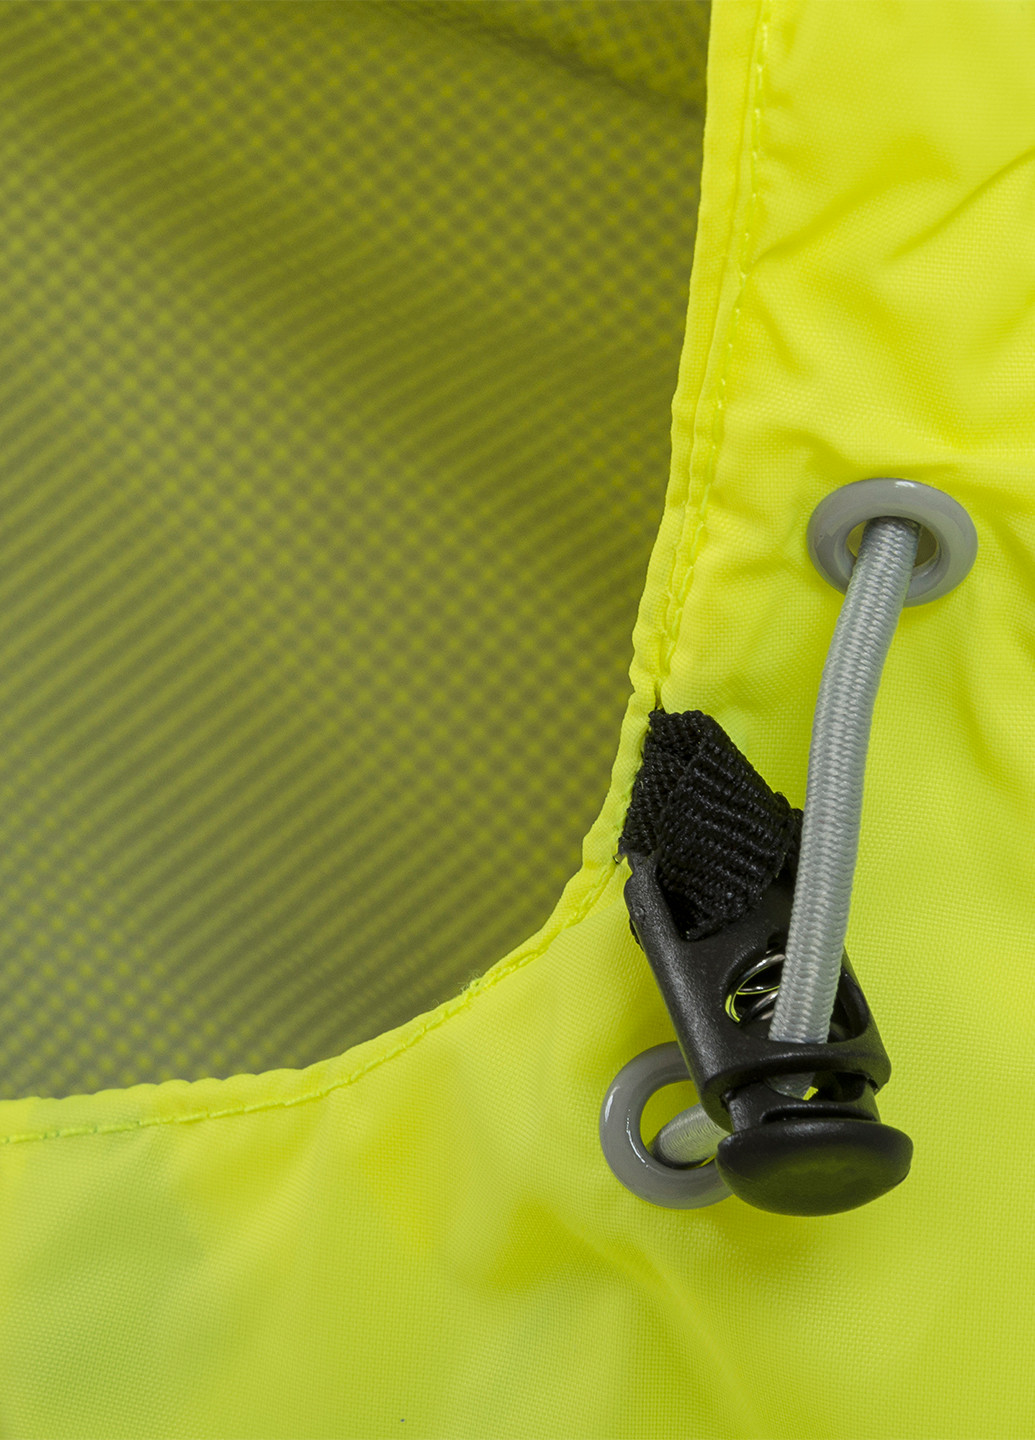 Желтая демисезонная ветровка Highlander Stow & Go Pack Away Rain Jacket 6000 mm Yellow M (JAC077-YW-M)